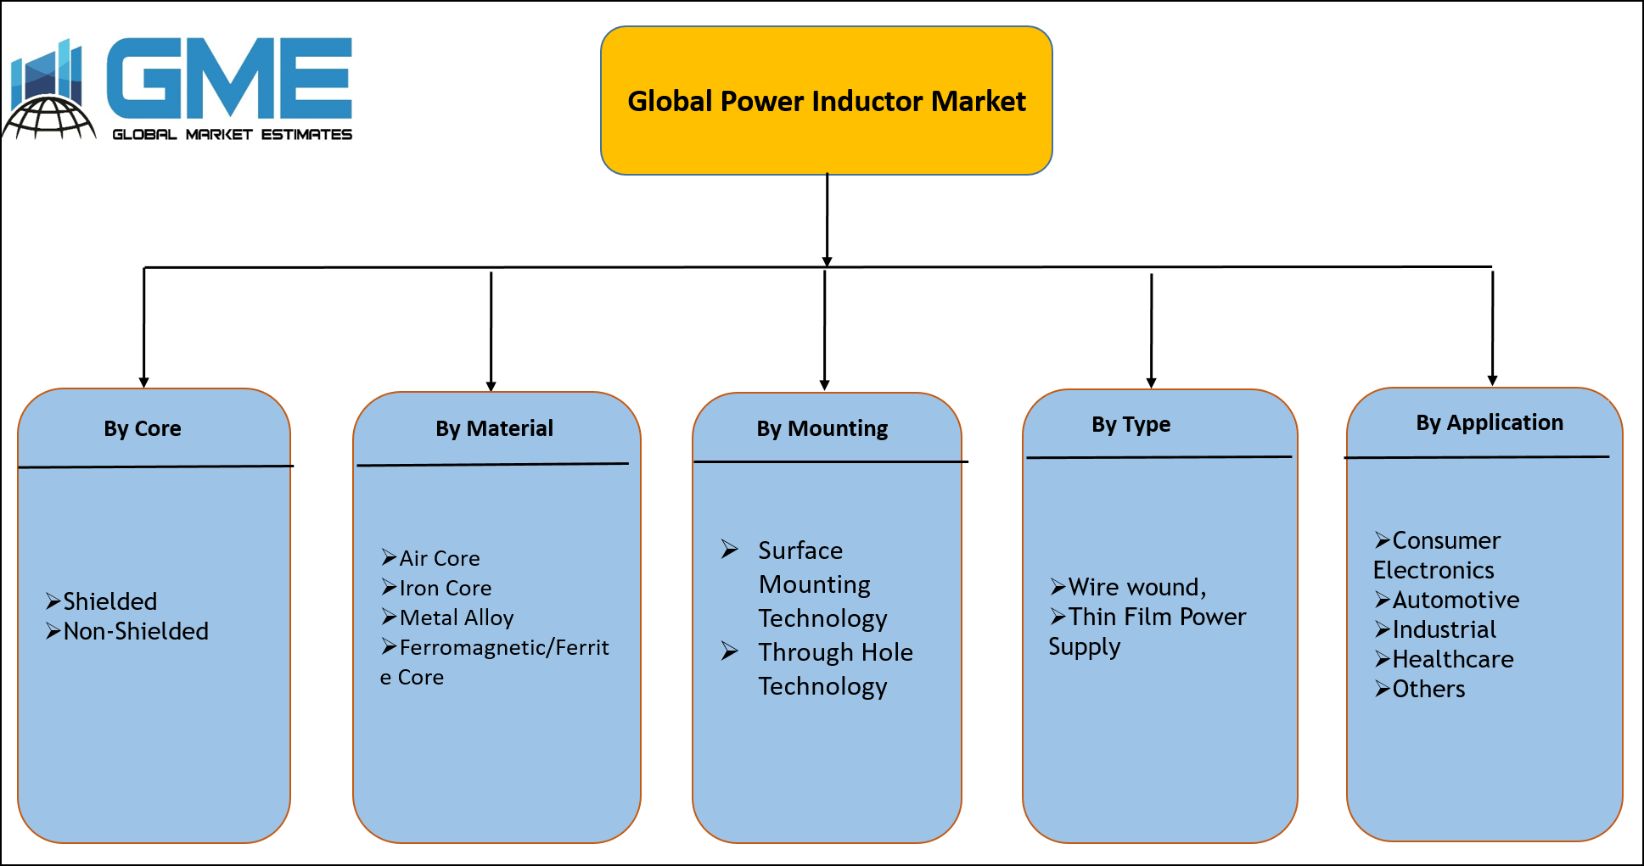 Global Power Inductor Market Segmentation